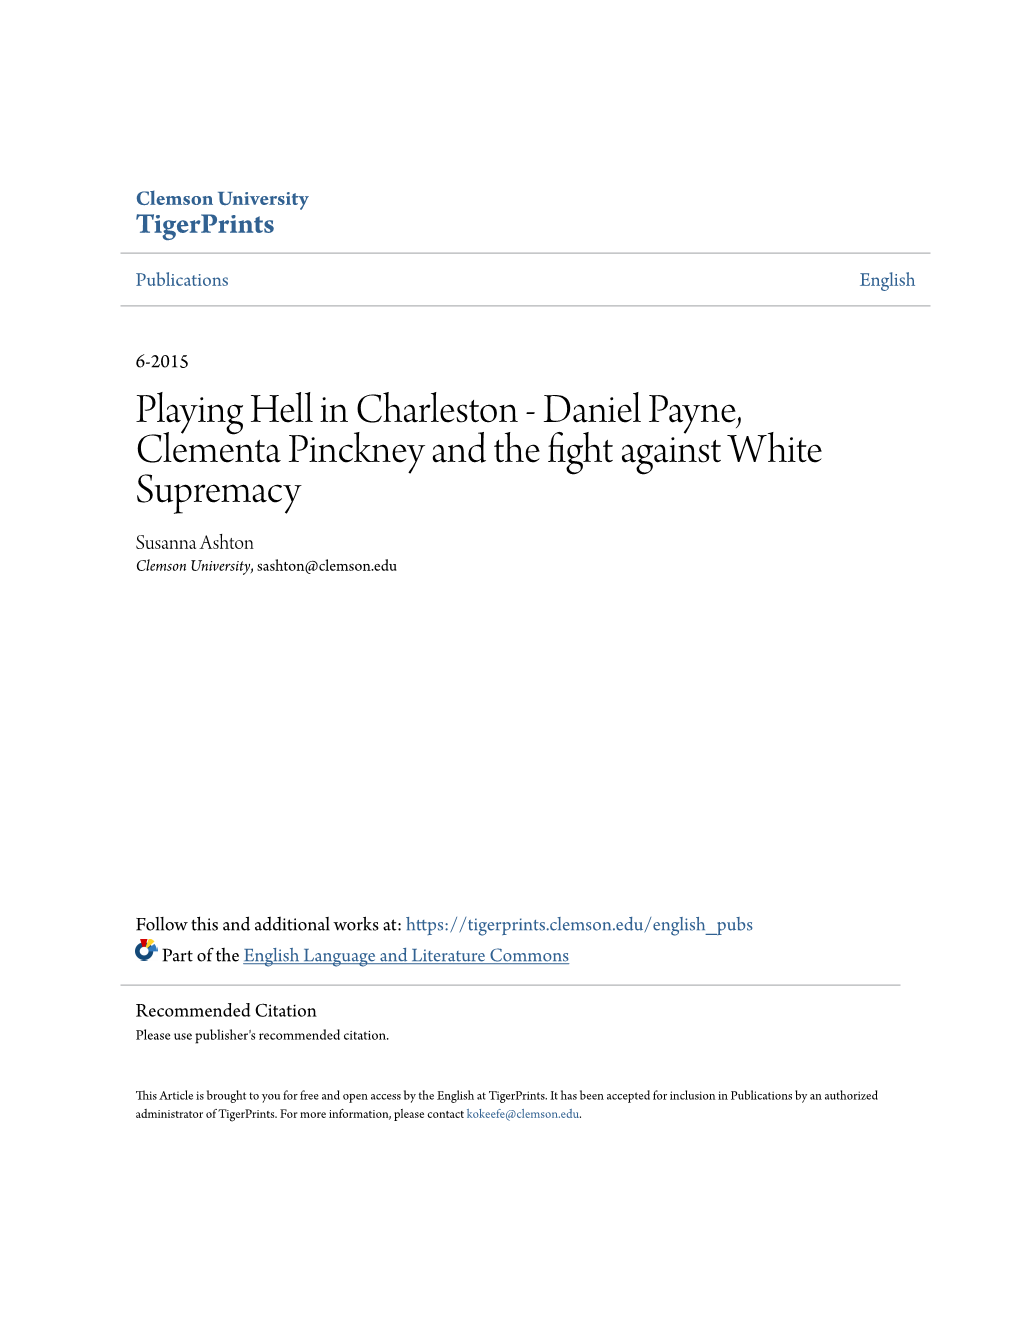 Daniel Payne, Clementa Pinckney and the Fight Against White Supremacy Susanna Ashton Clemson University, Sashton@Clemson.Edu